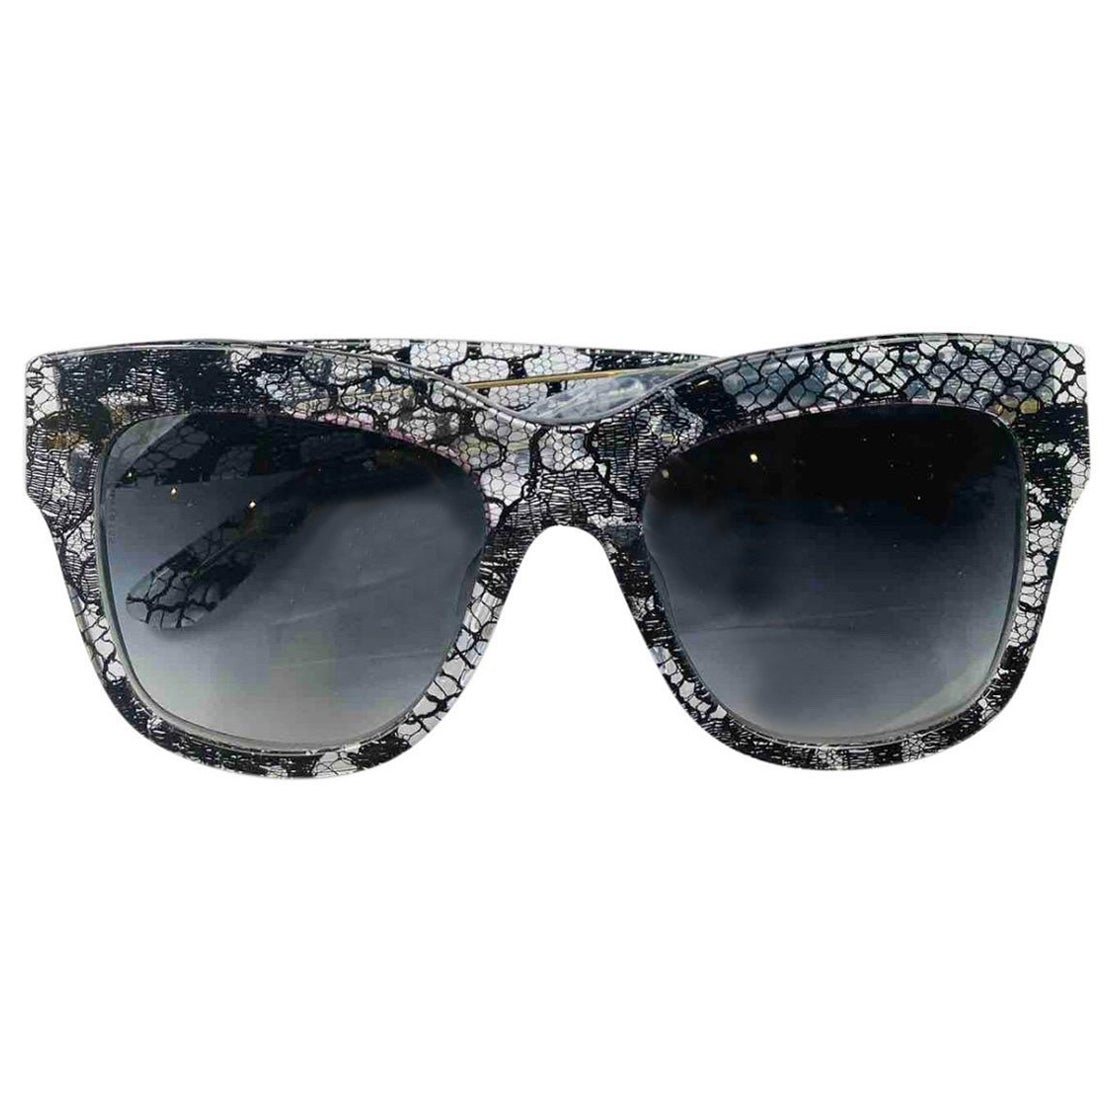 Dolce & Gabbana Plastic Black Sicily
Taormina Lace printed sunglasses For Sale